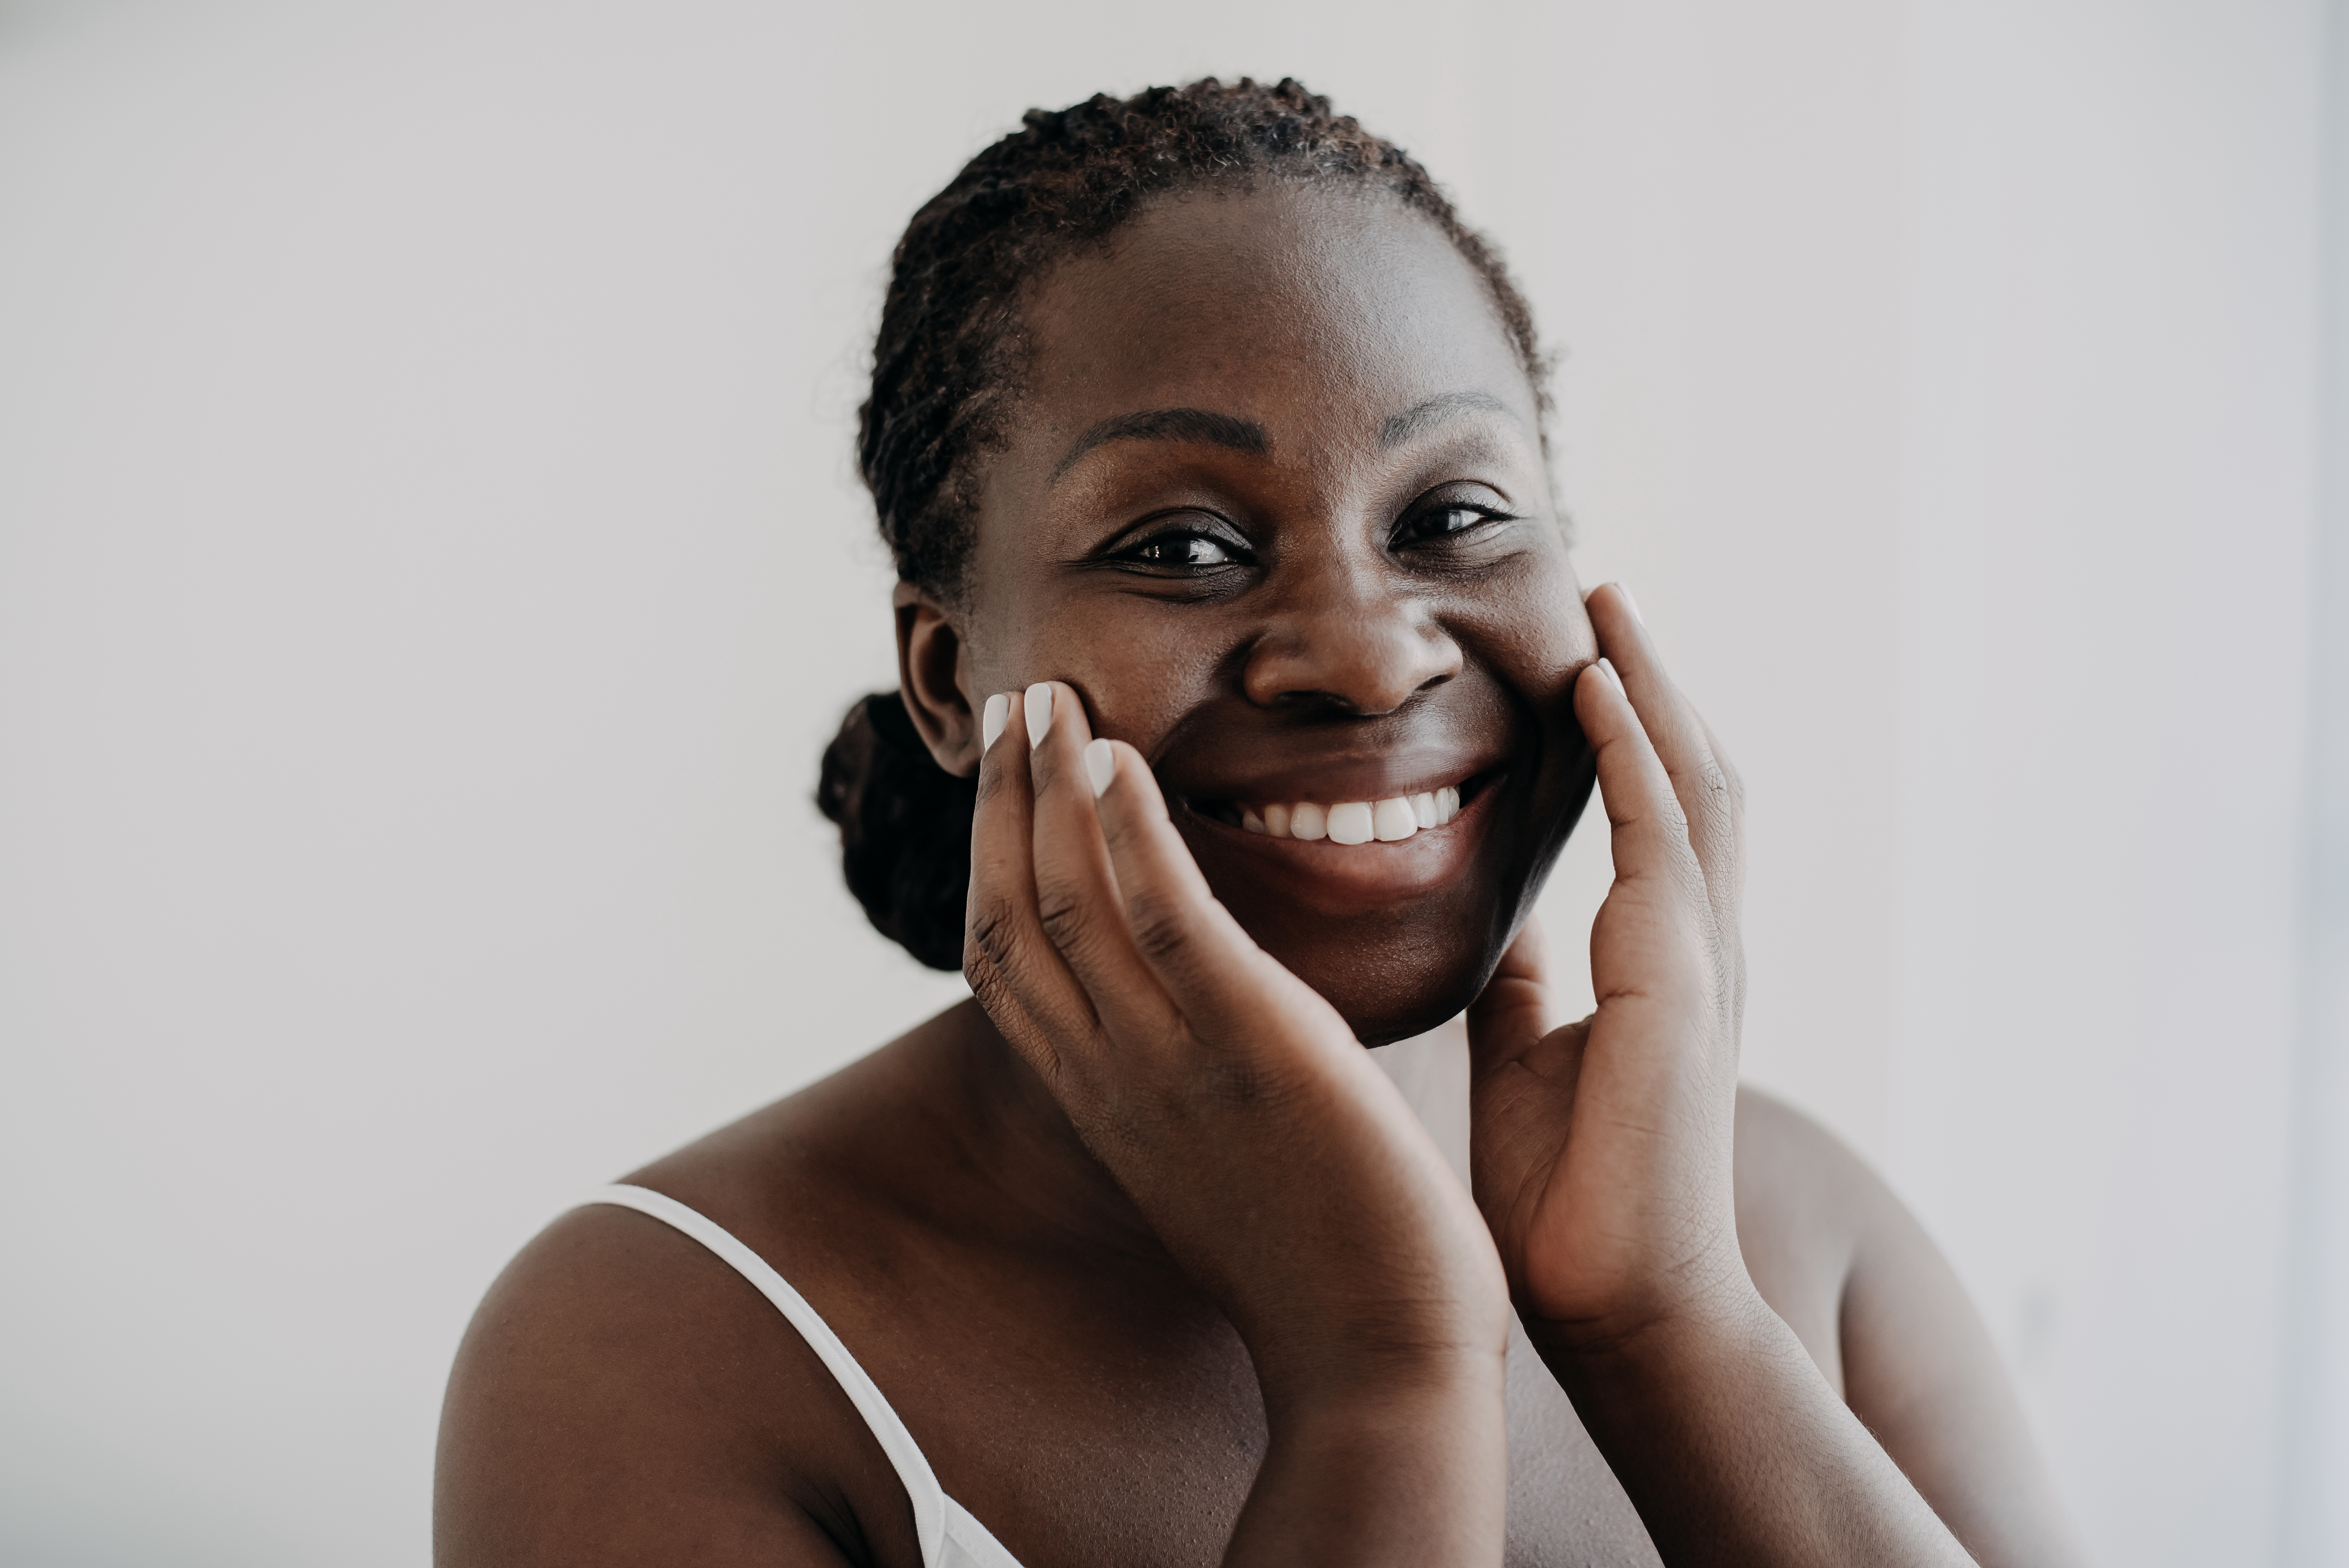 A mature Black woman getting face massage benefits by massaging her face